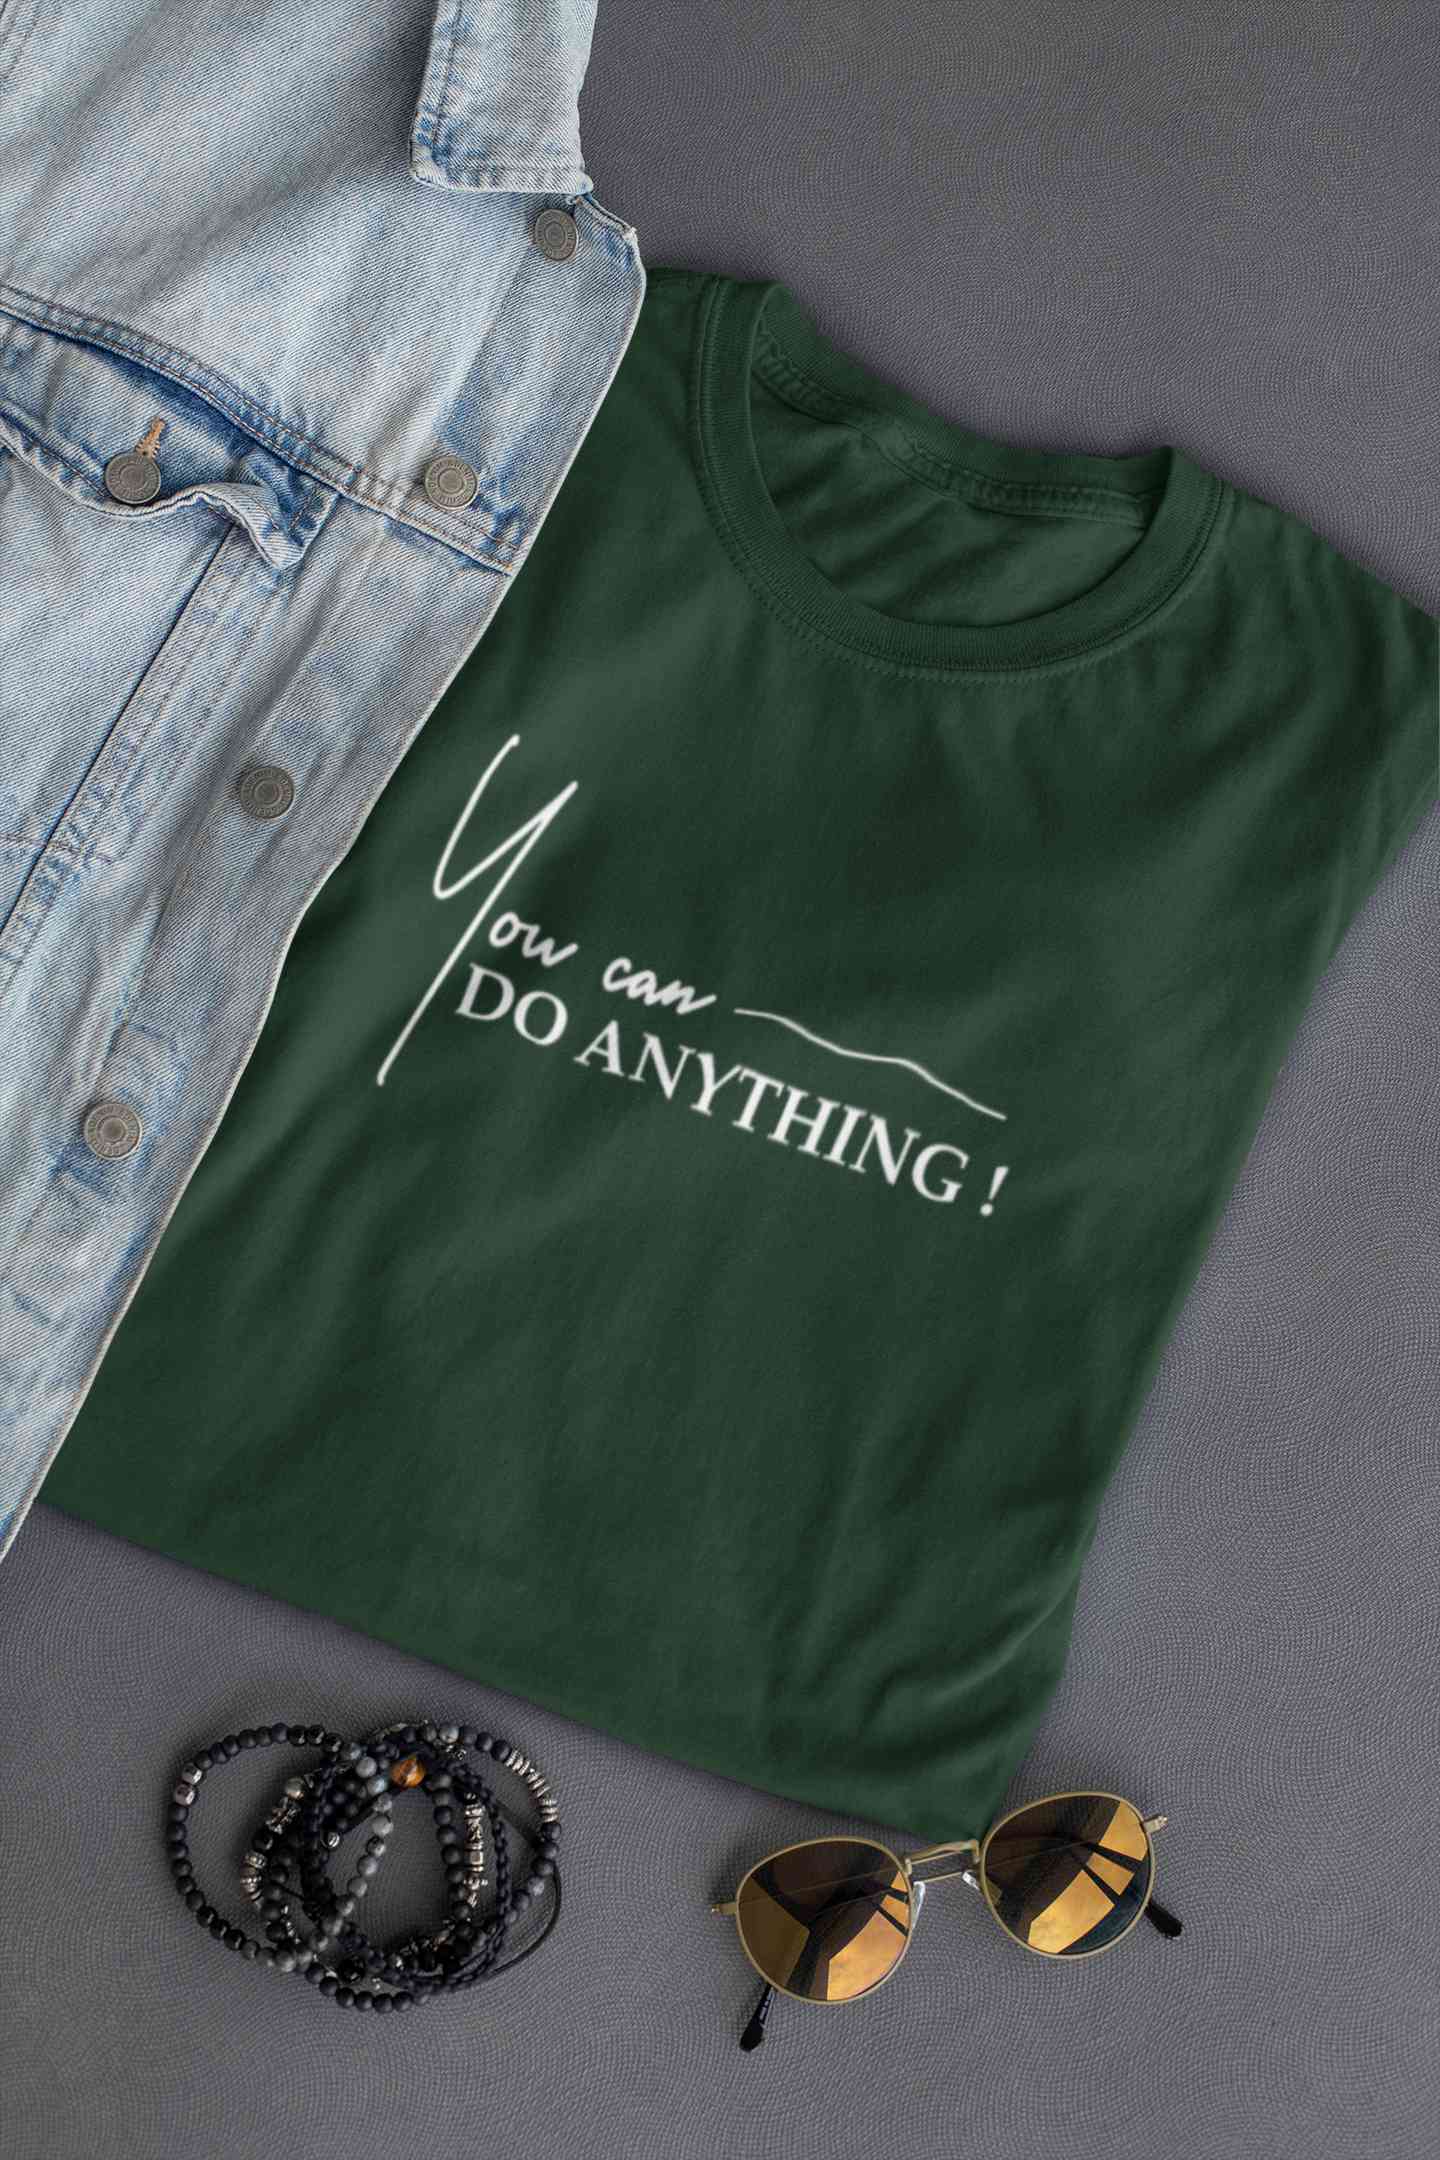 You Can Do Anything Mens Half Sleeves T-shirt- FunkyTeesClub